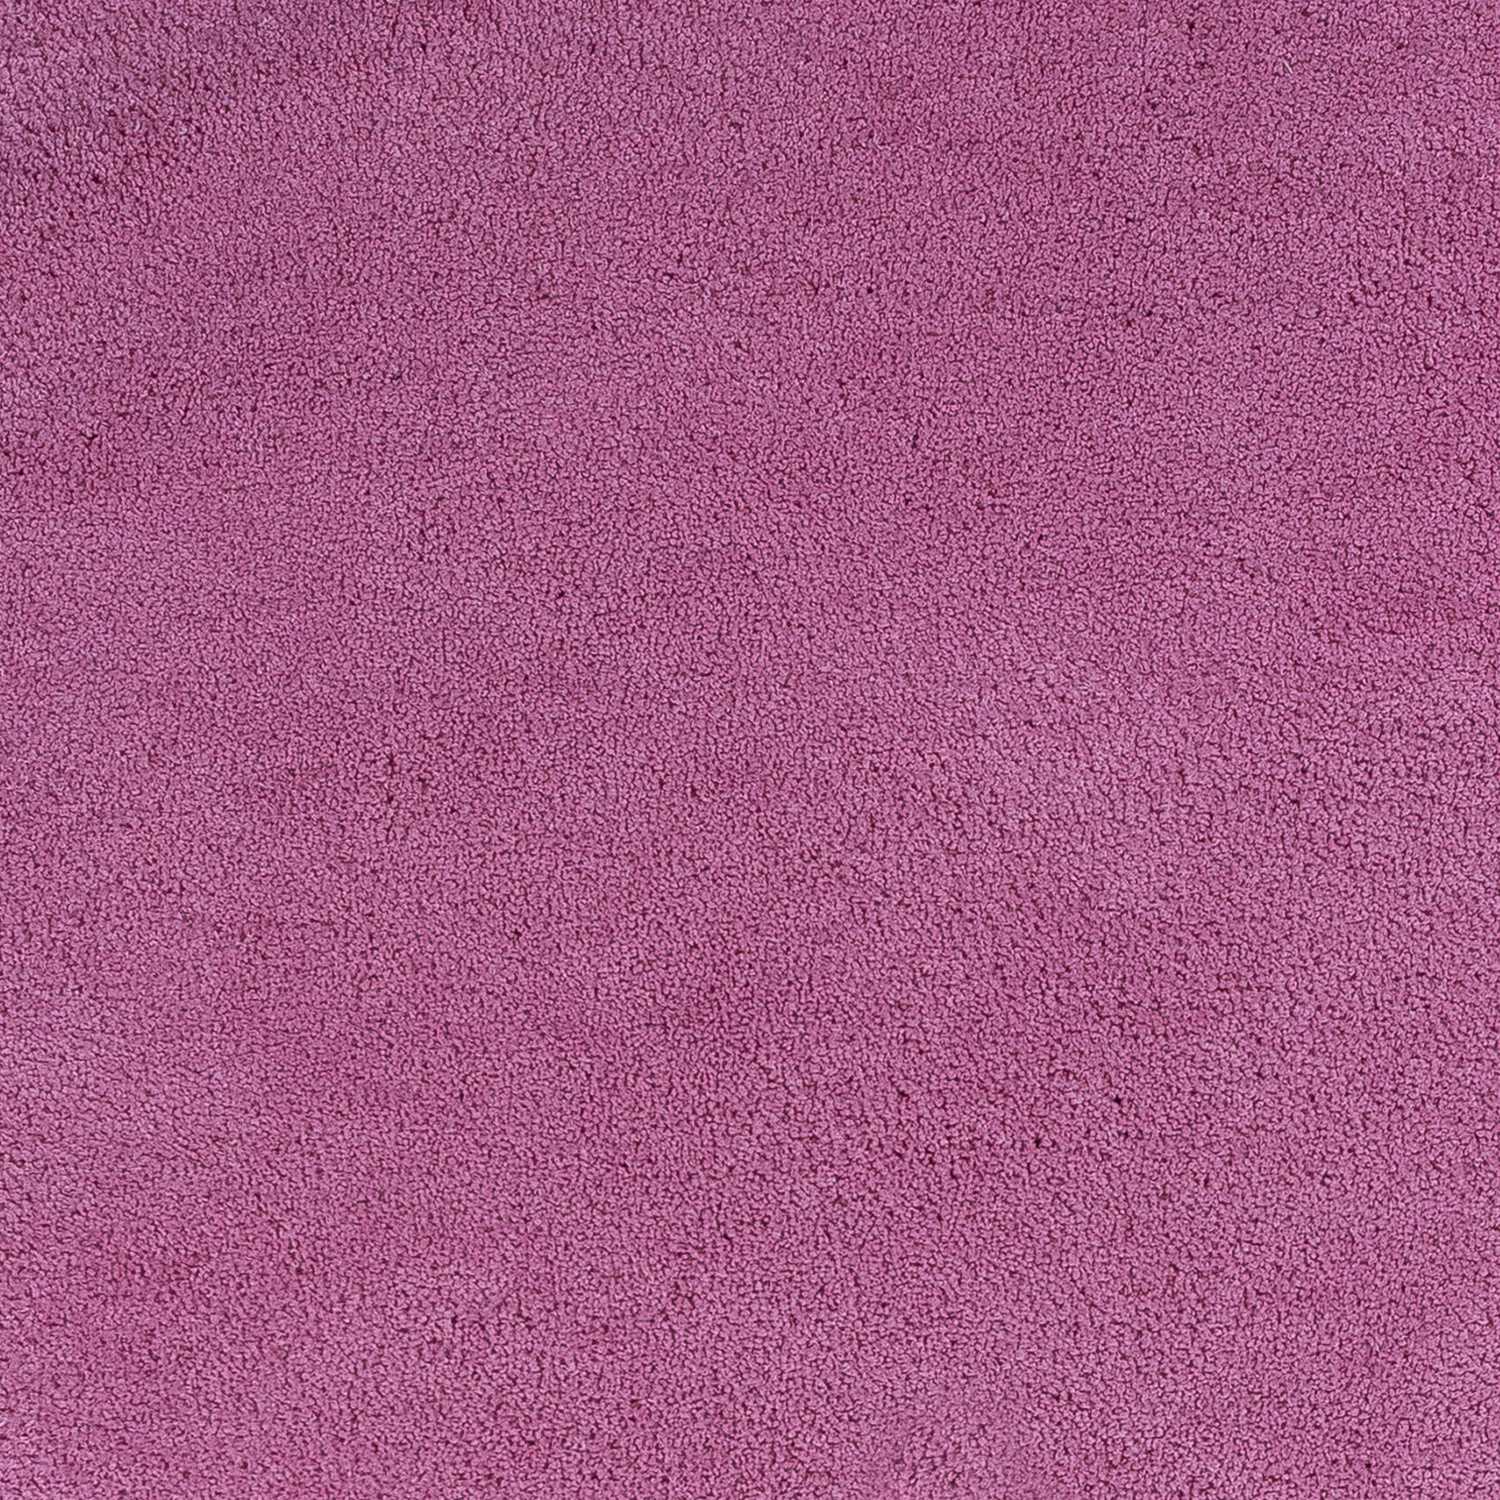 8' x 11'  Bright Hot Pink Shag Area Rug